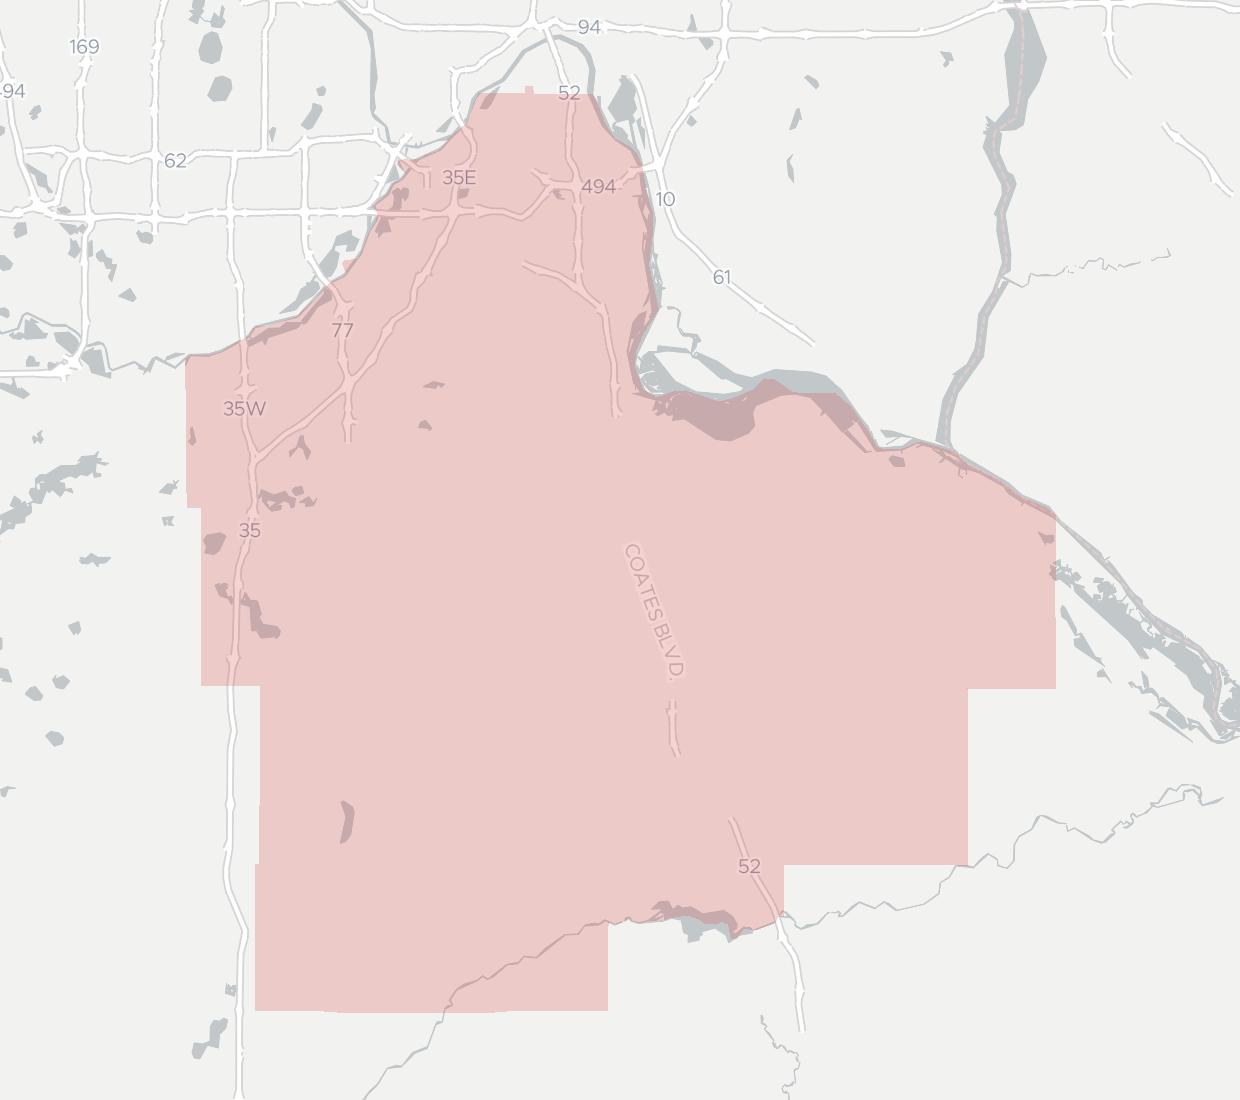 Gigabit Minnesota Coverage Map